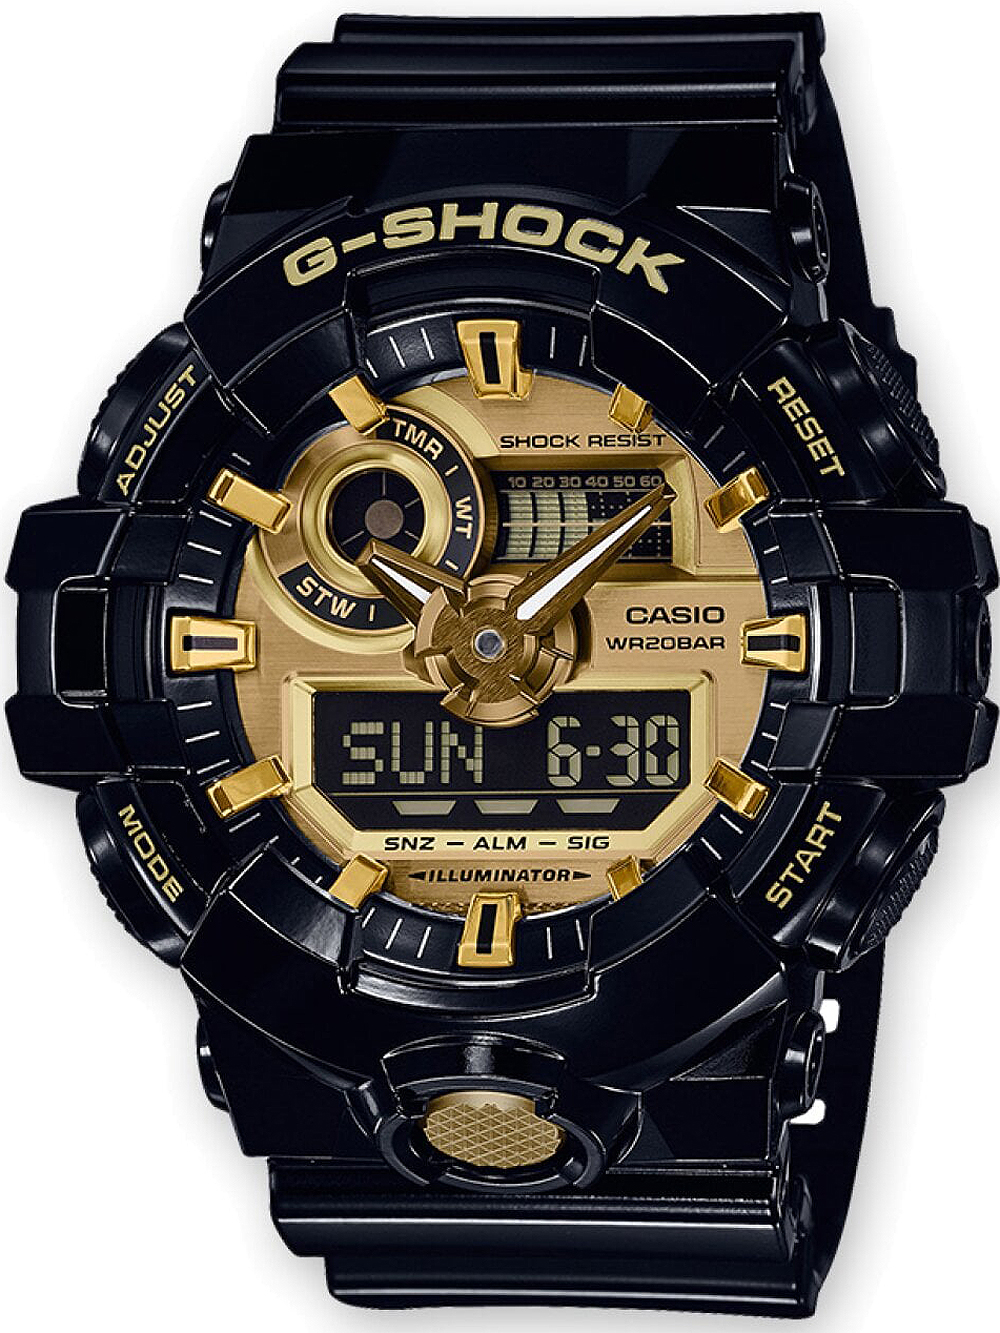 Pánské hodinky Casio GA-710GB-1AER G-Shock